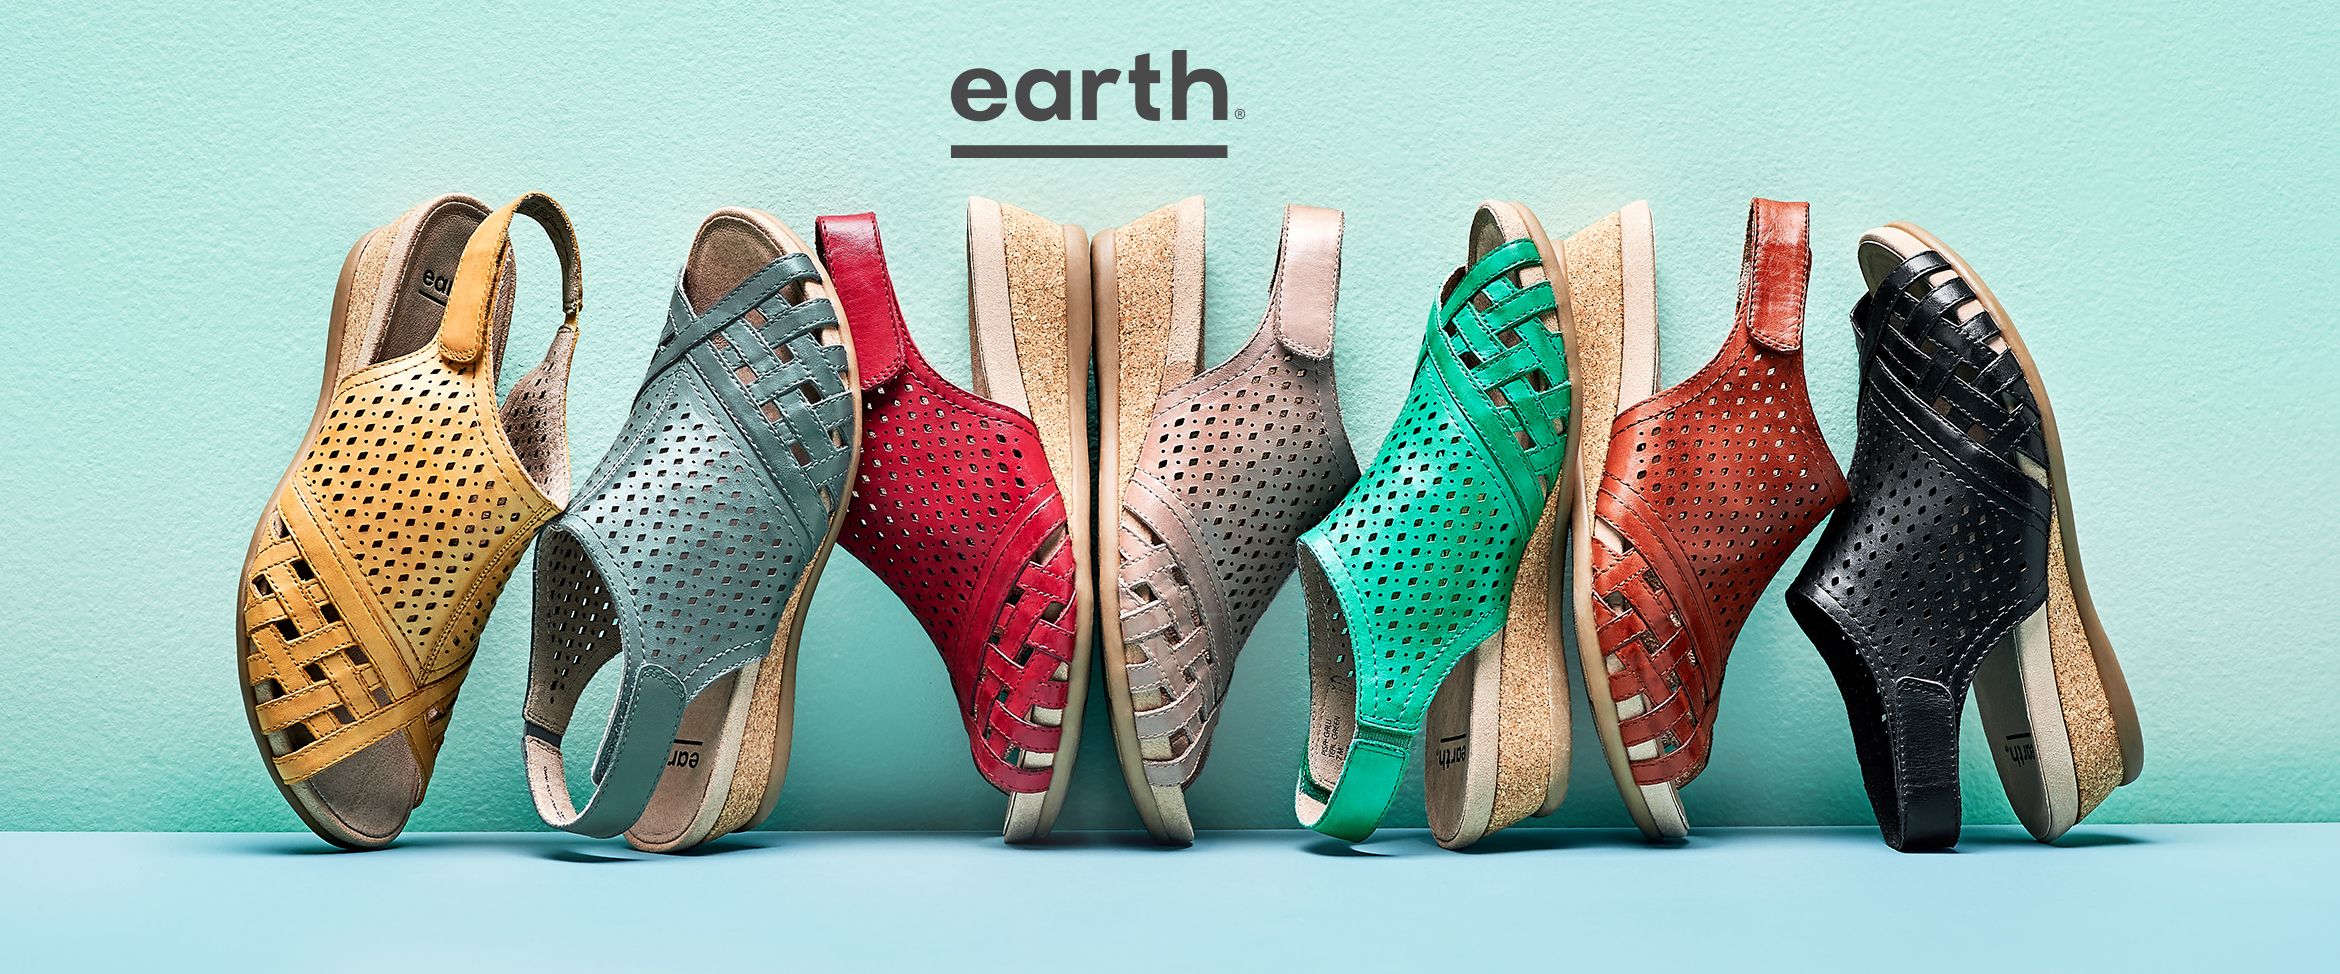 earth shoes pisa galli